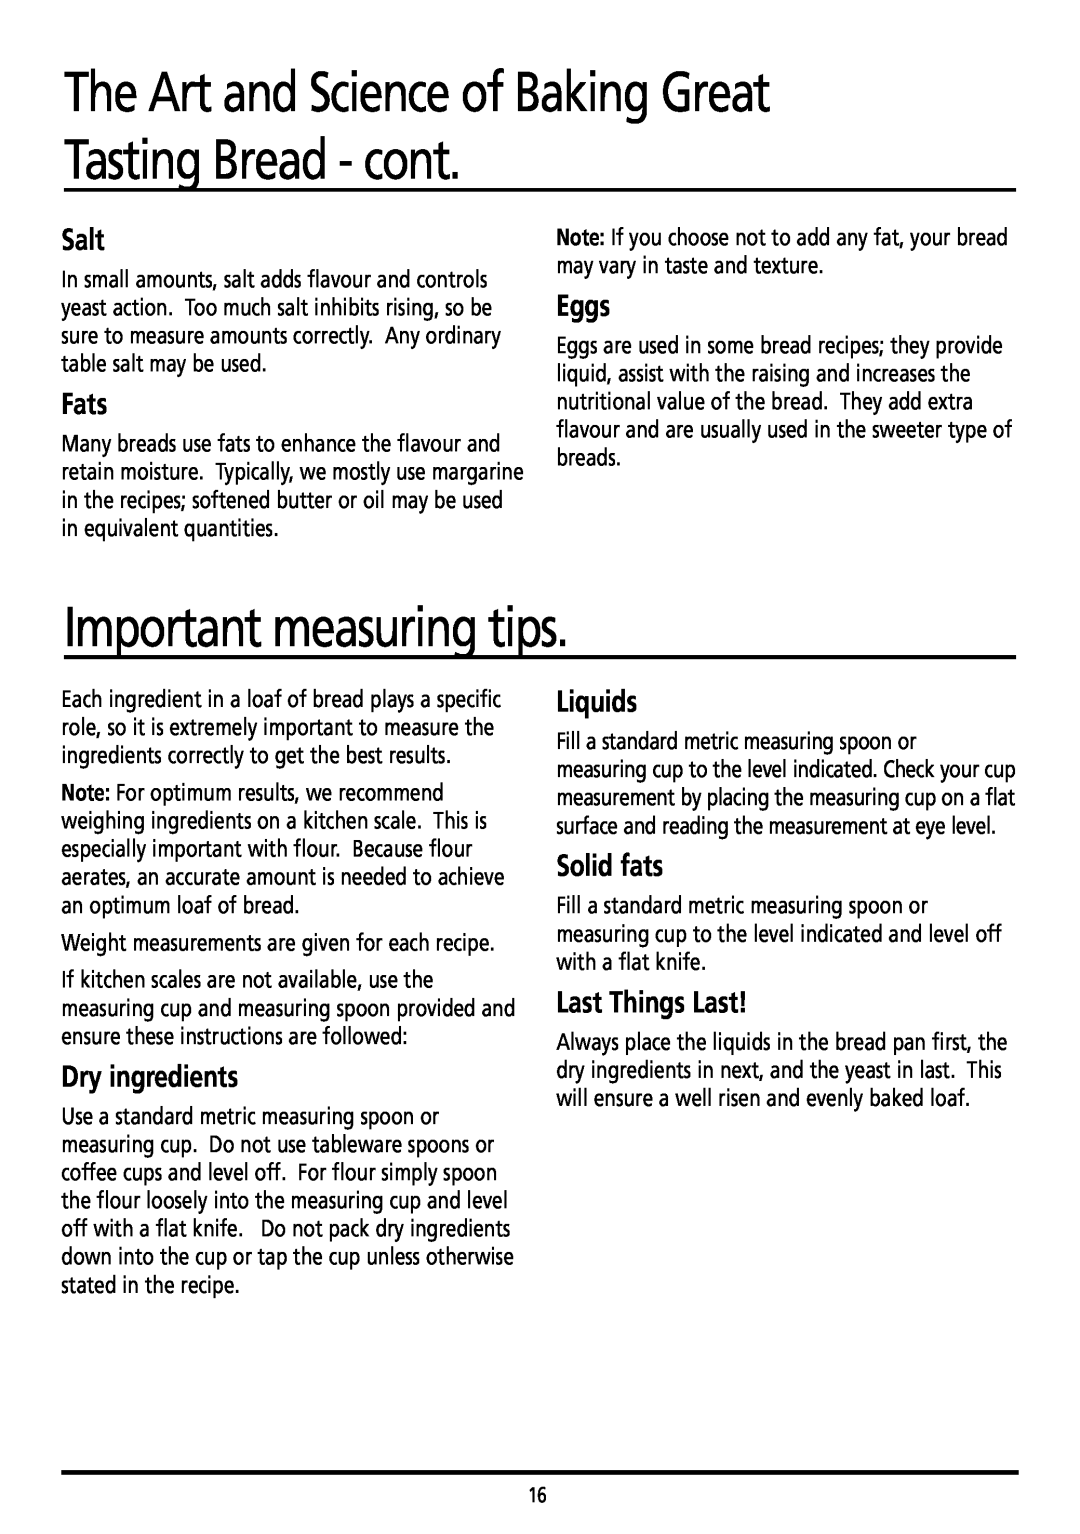 Sunbeam BM7800 manual Important measuring tips, Salt, Fats, Eggs, Dry ingredients, Solid fats, Last Things Last, Liquids 